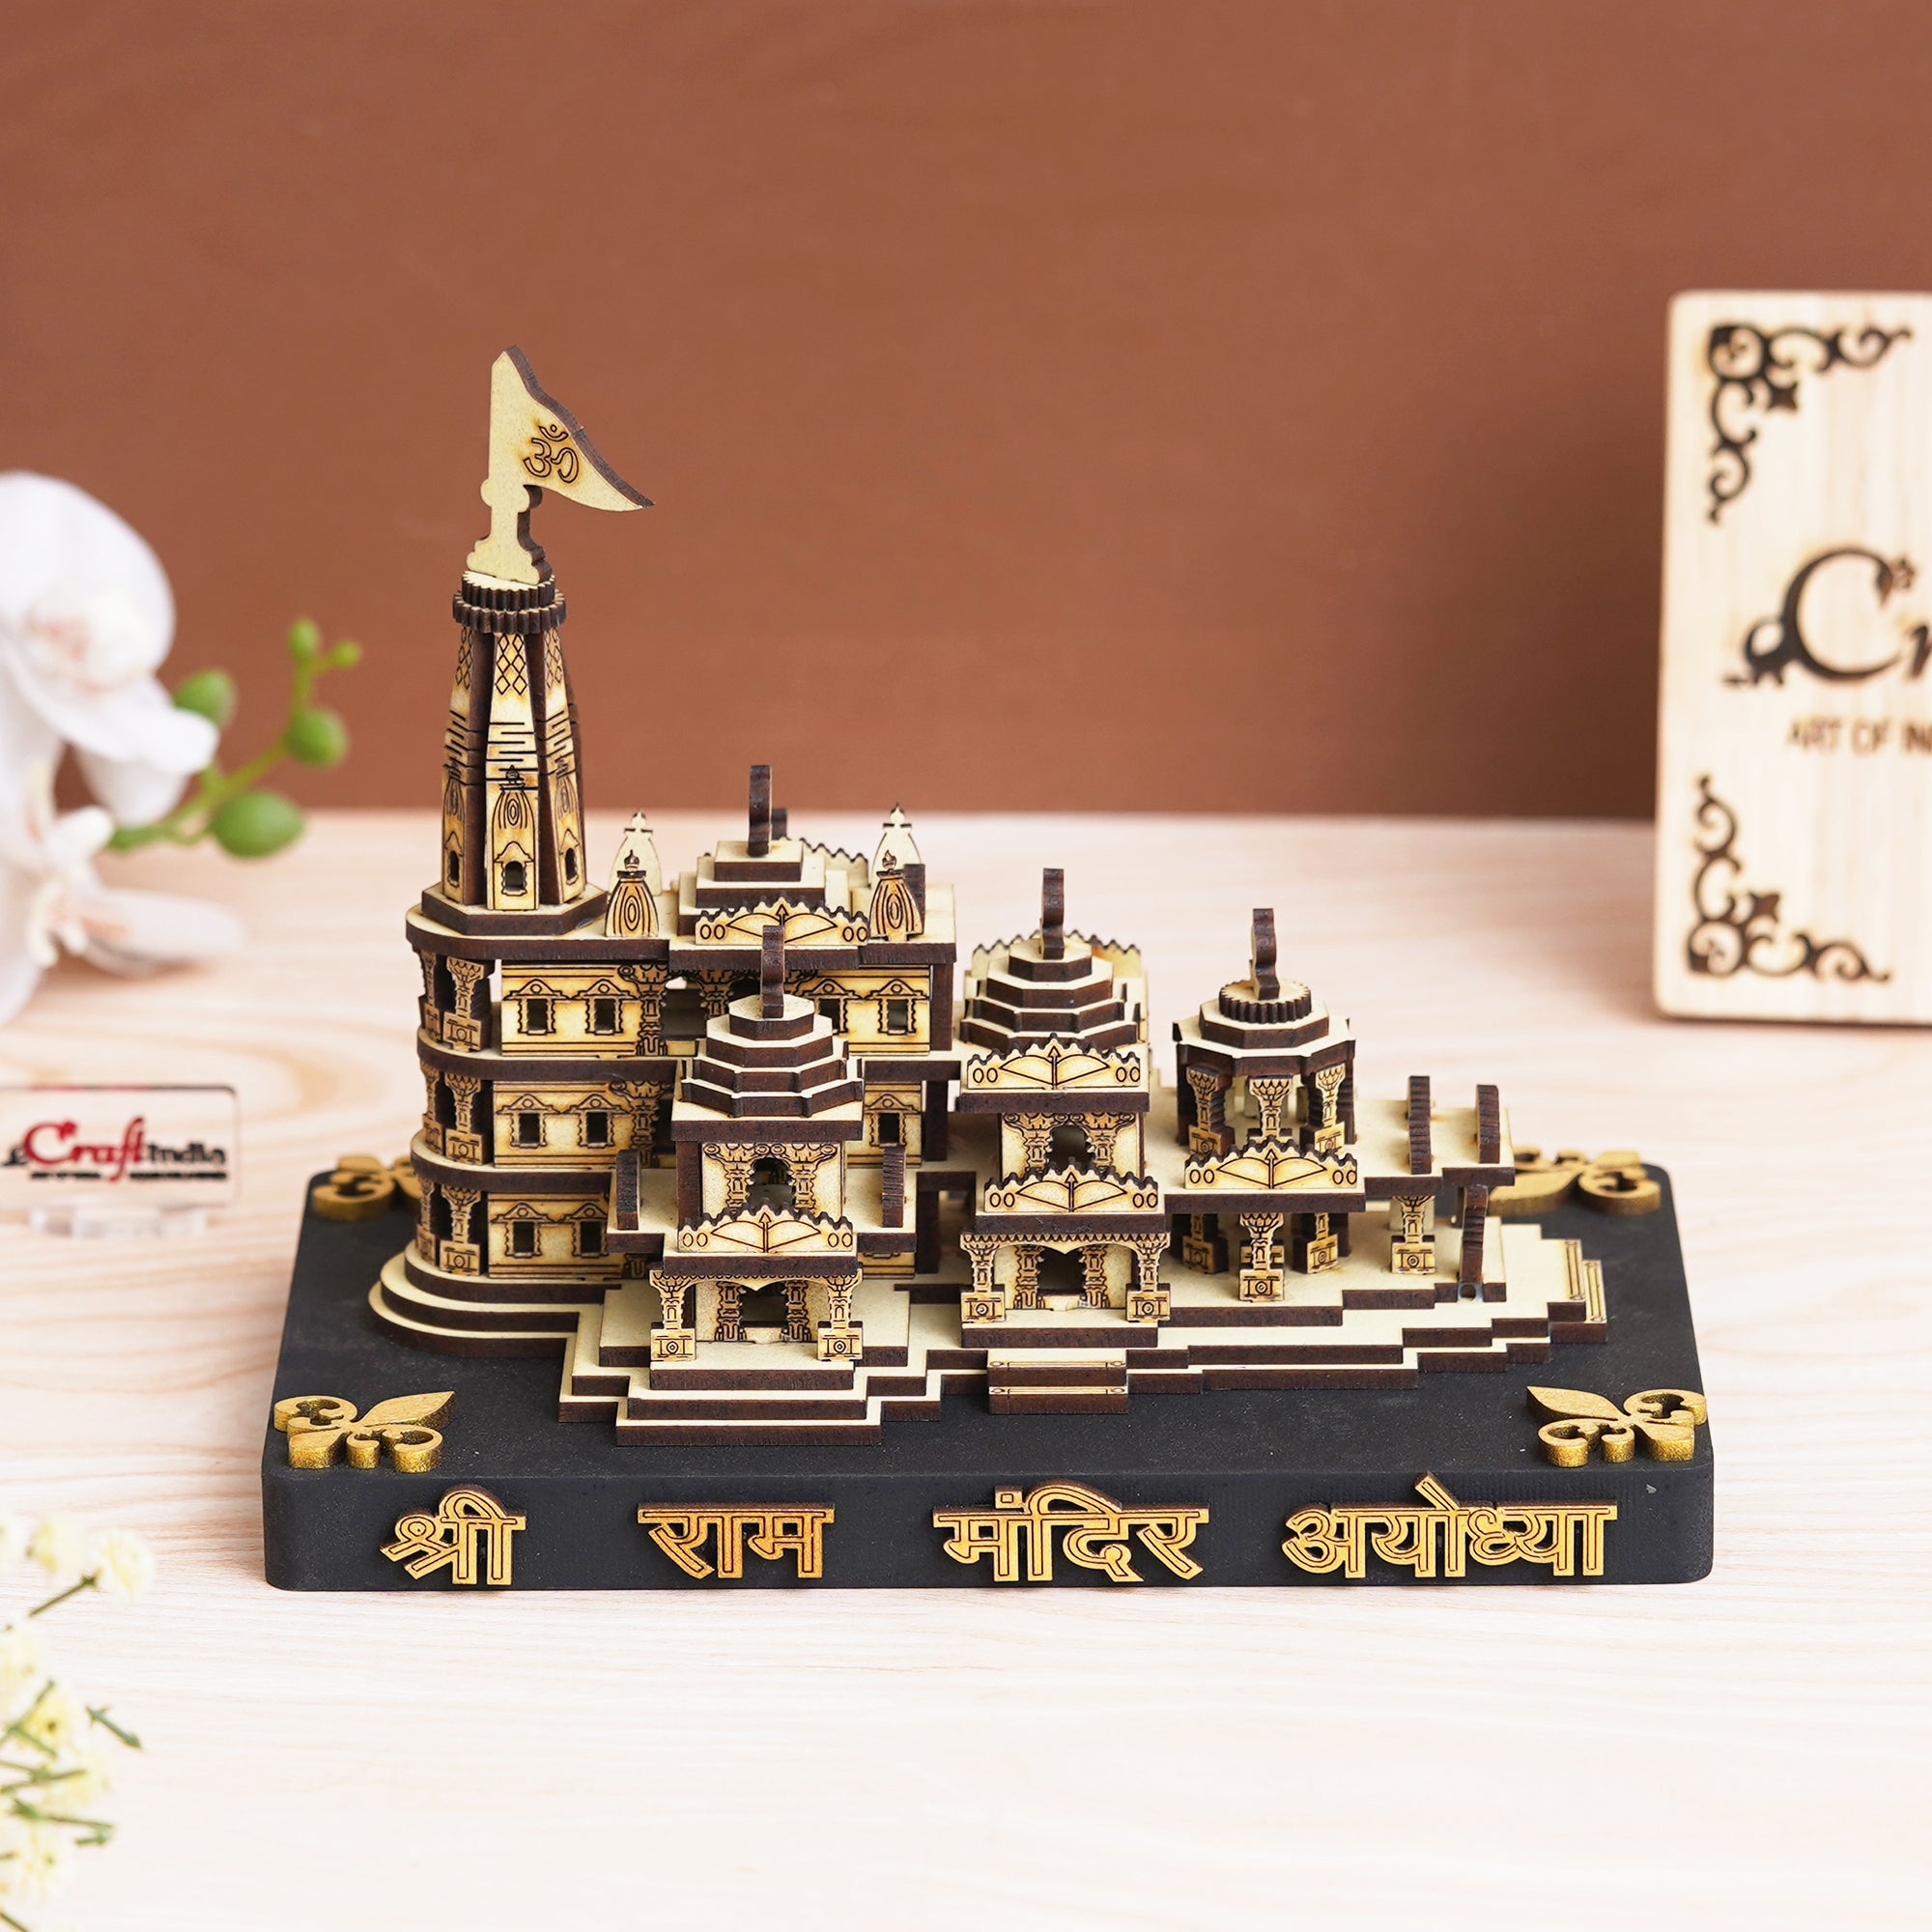 eCraftIndia Shri Ram Mandir Ayodhya Model - Wooden MDF Craftsmanship Authentic Designer Temple - Ideal for Home Temple, Decor, and Spiritual Gifting (Beige, Gold)